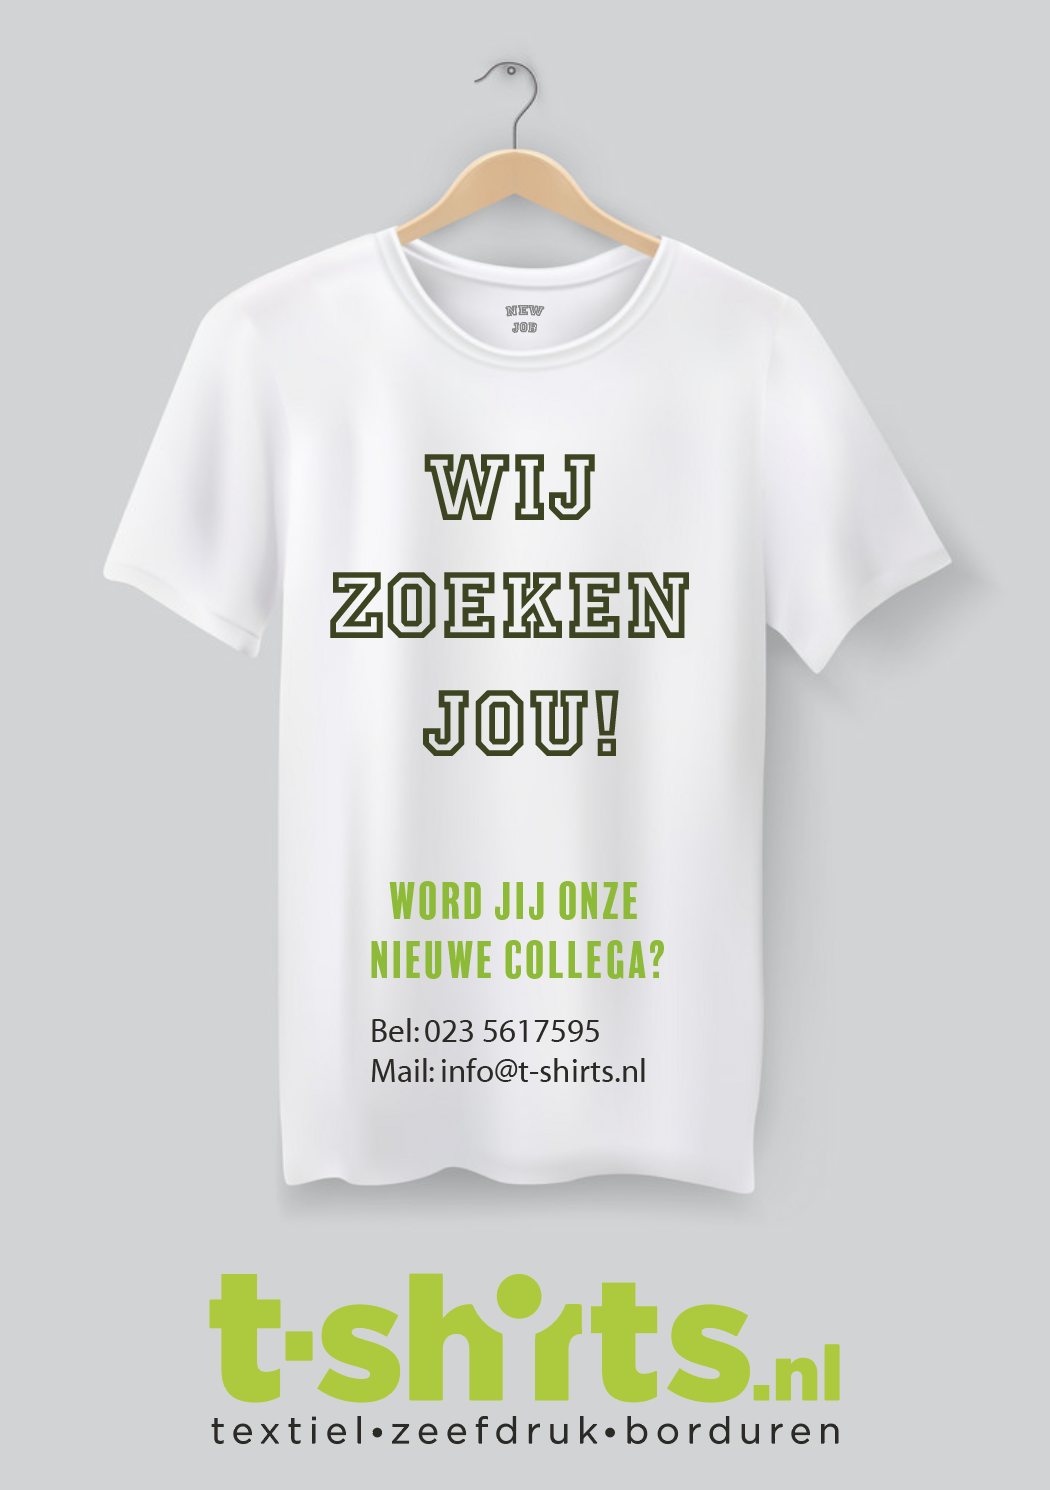 Waarschuwing donker slecht T-shirts bedrukken of borduren: vanaf € 1,95 per shirt - T-shirts.nl